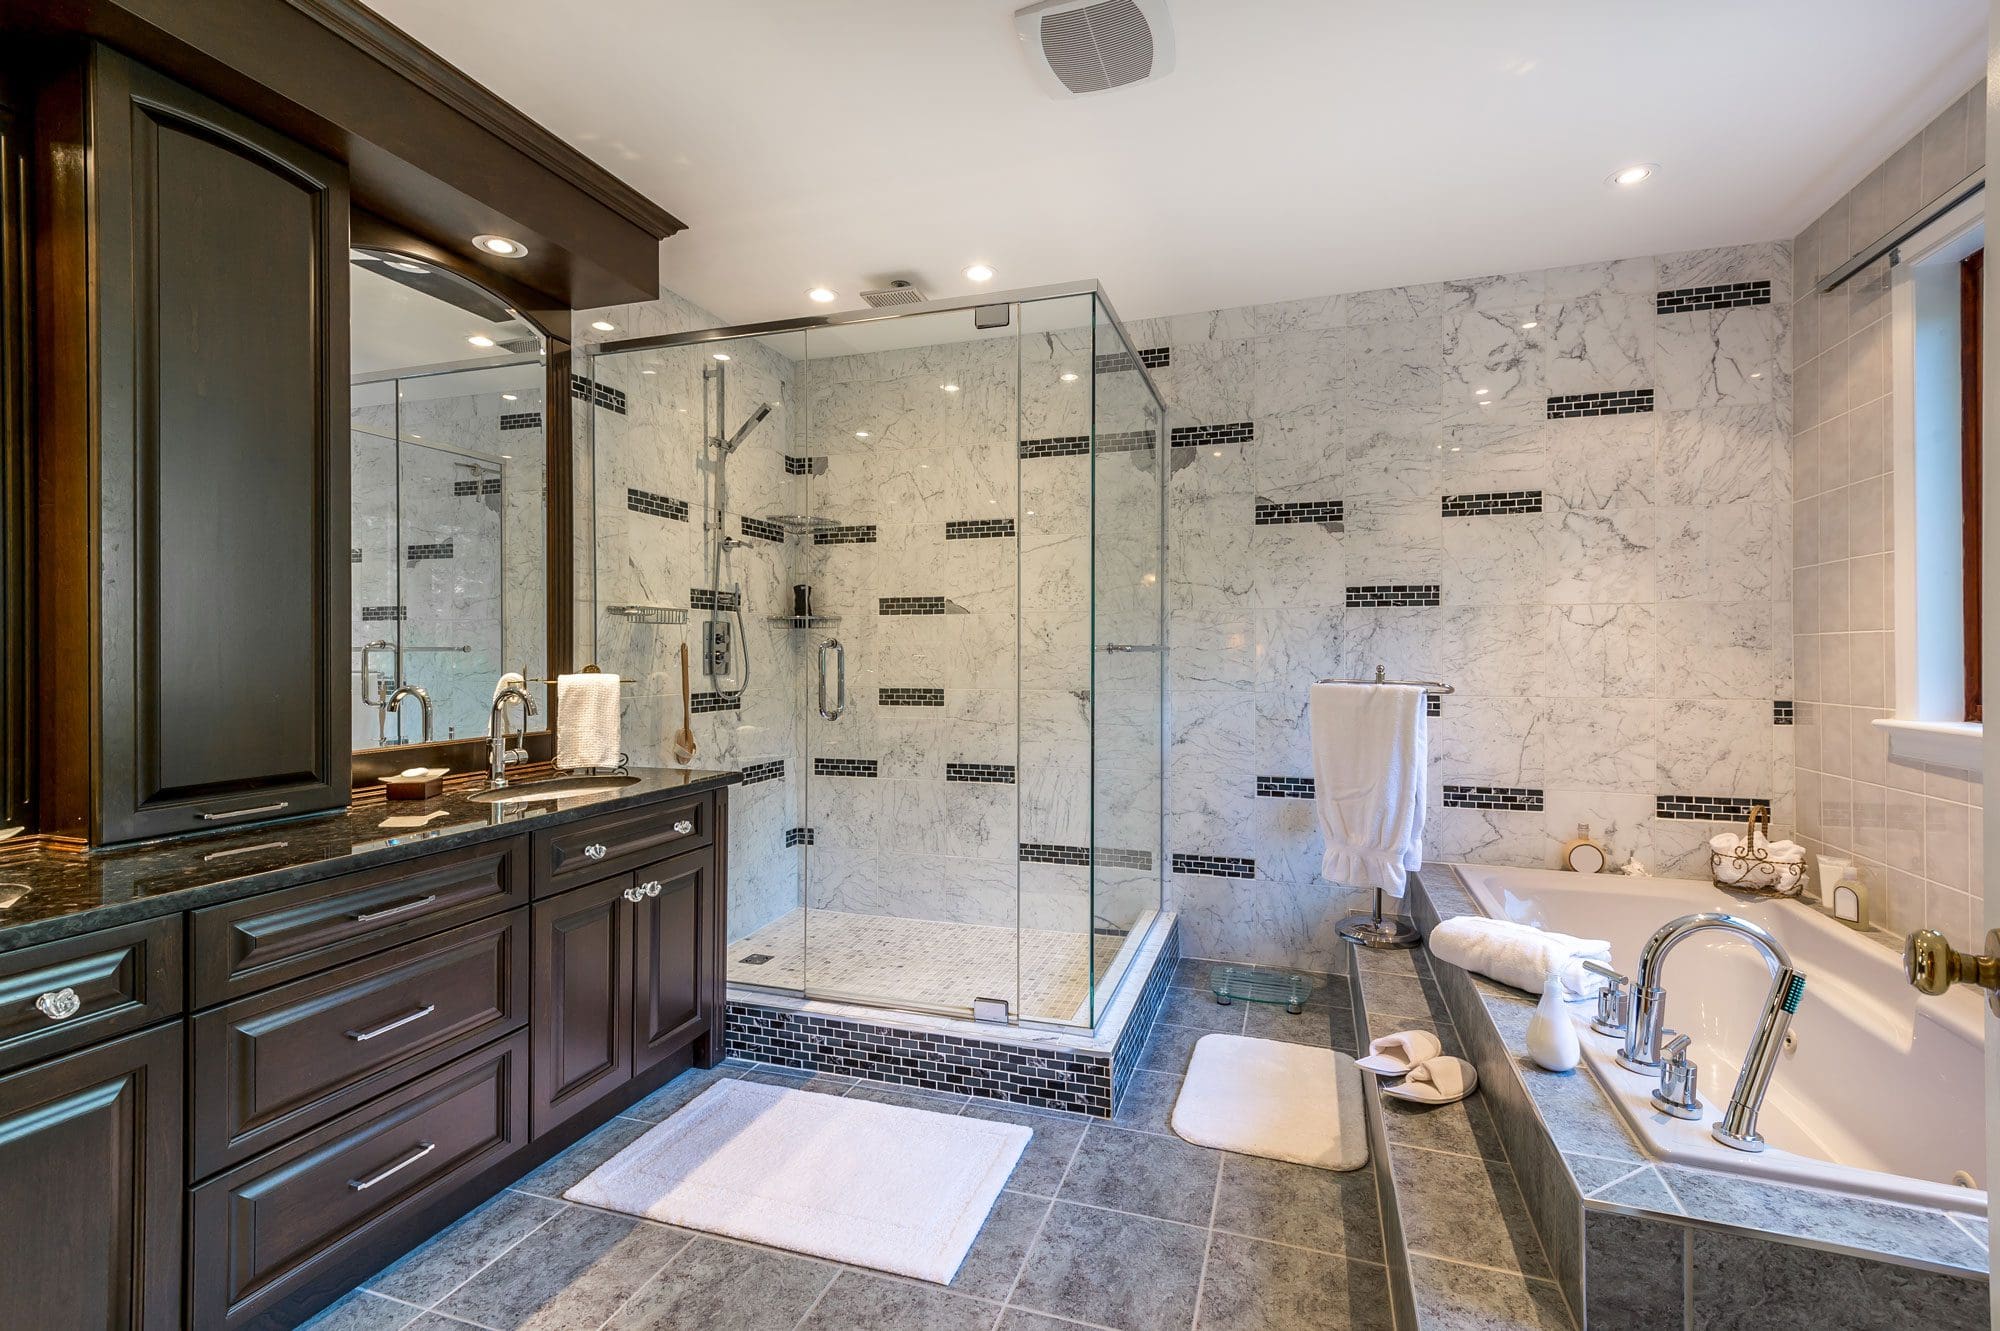 Elegant bathroom with a glass shower and large bath tub